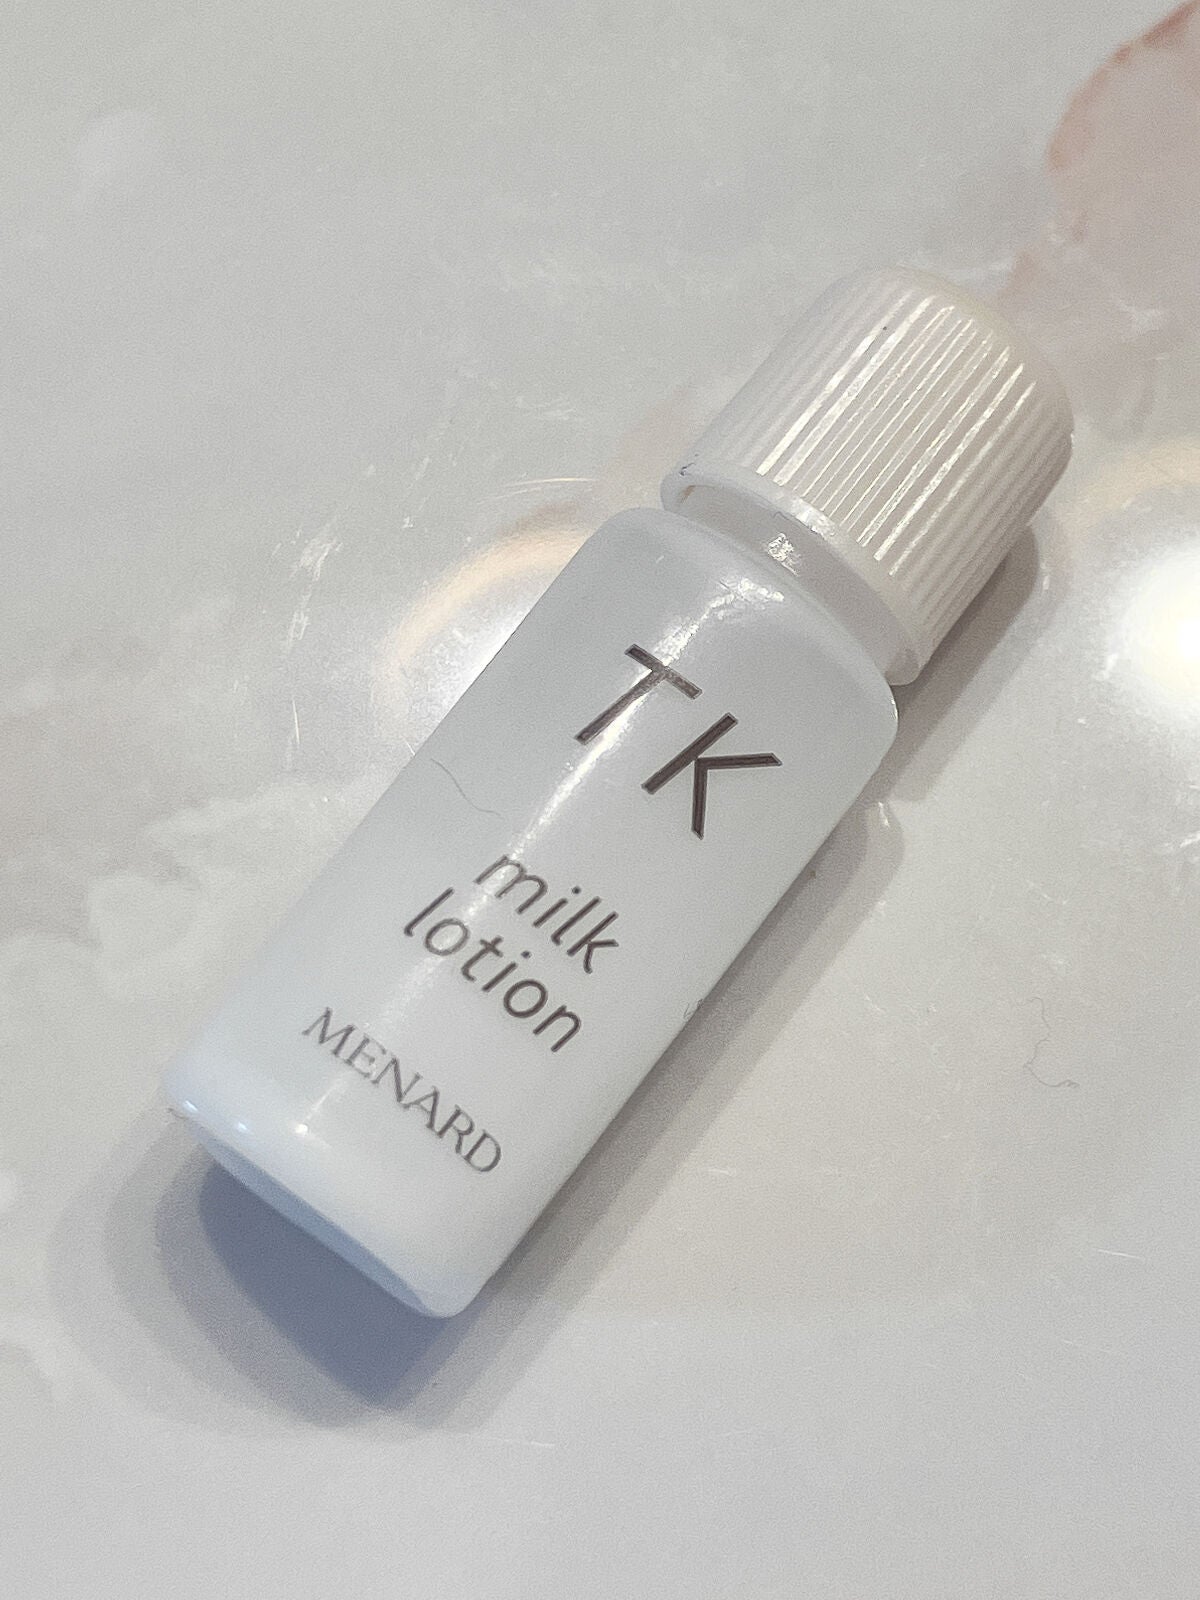 MENARD TK ミルクローション - 乳液・ミルク